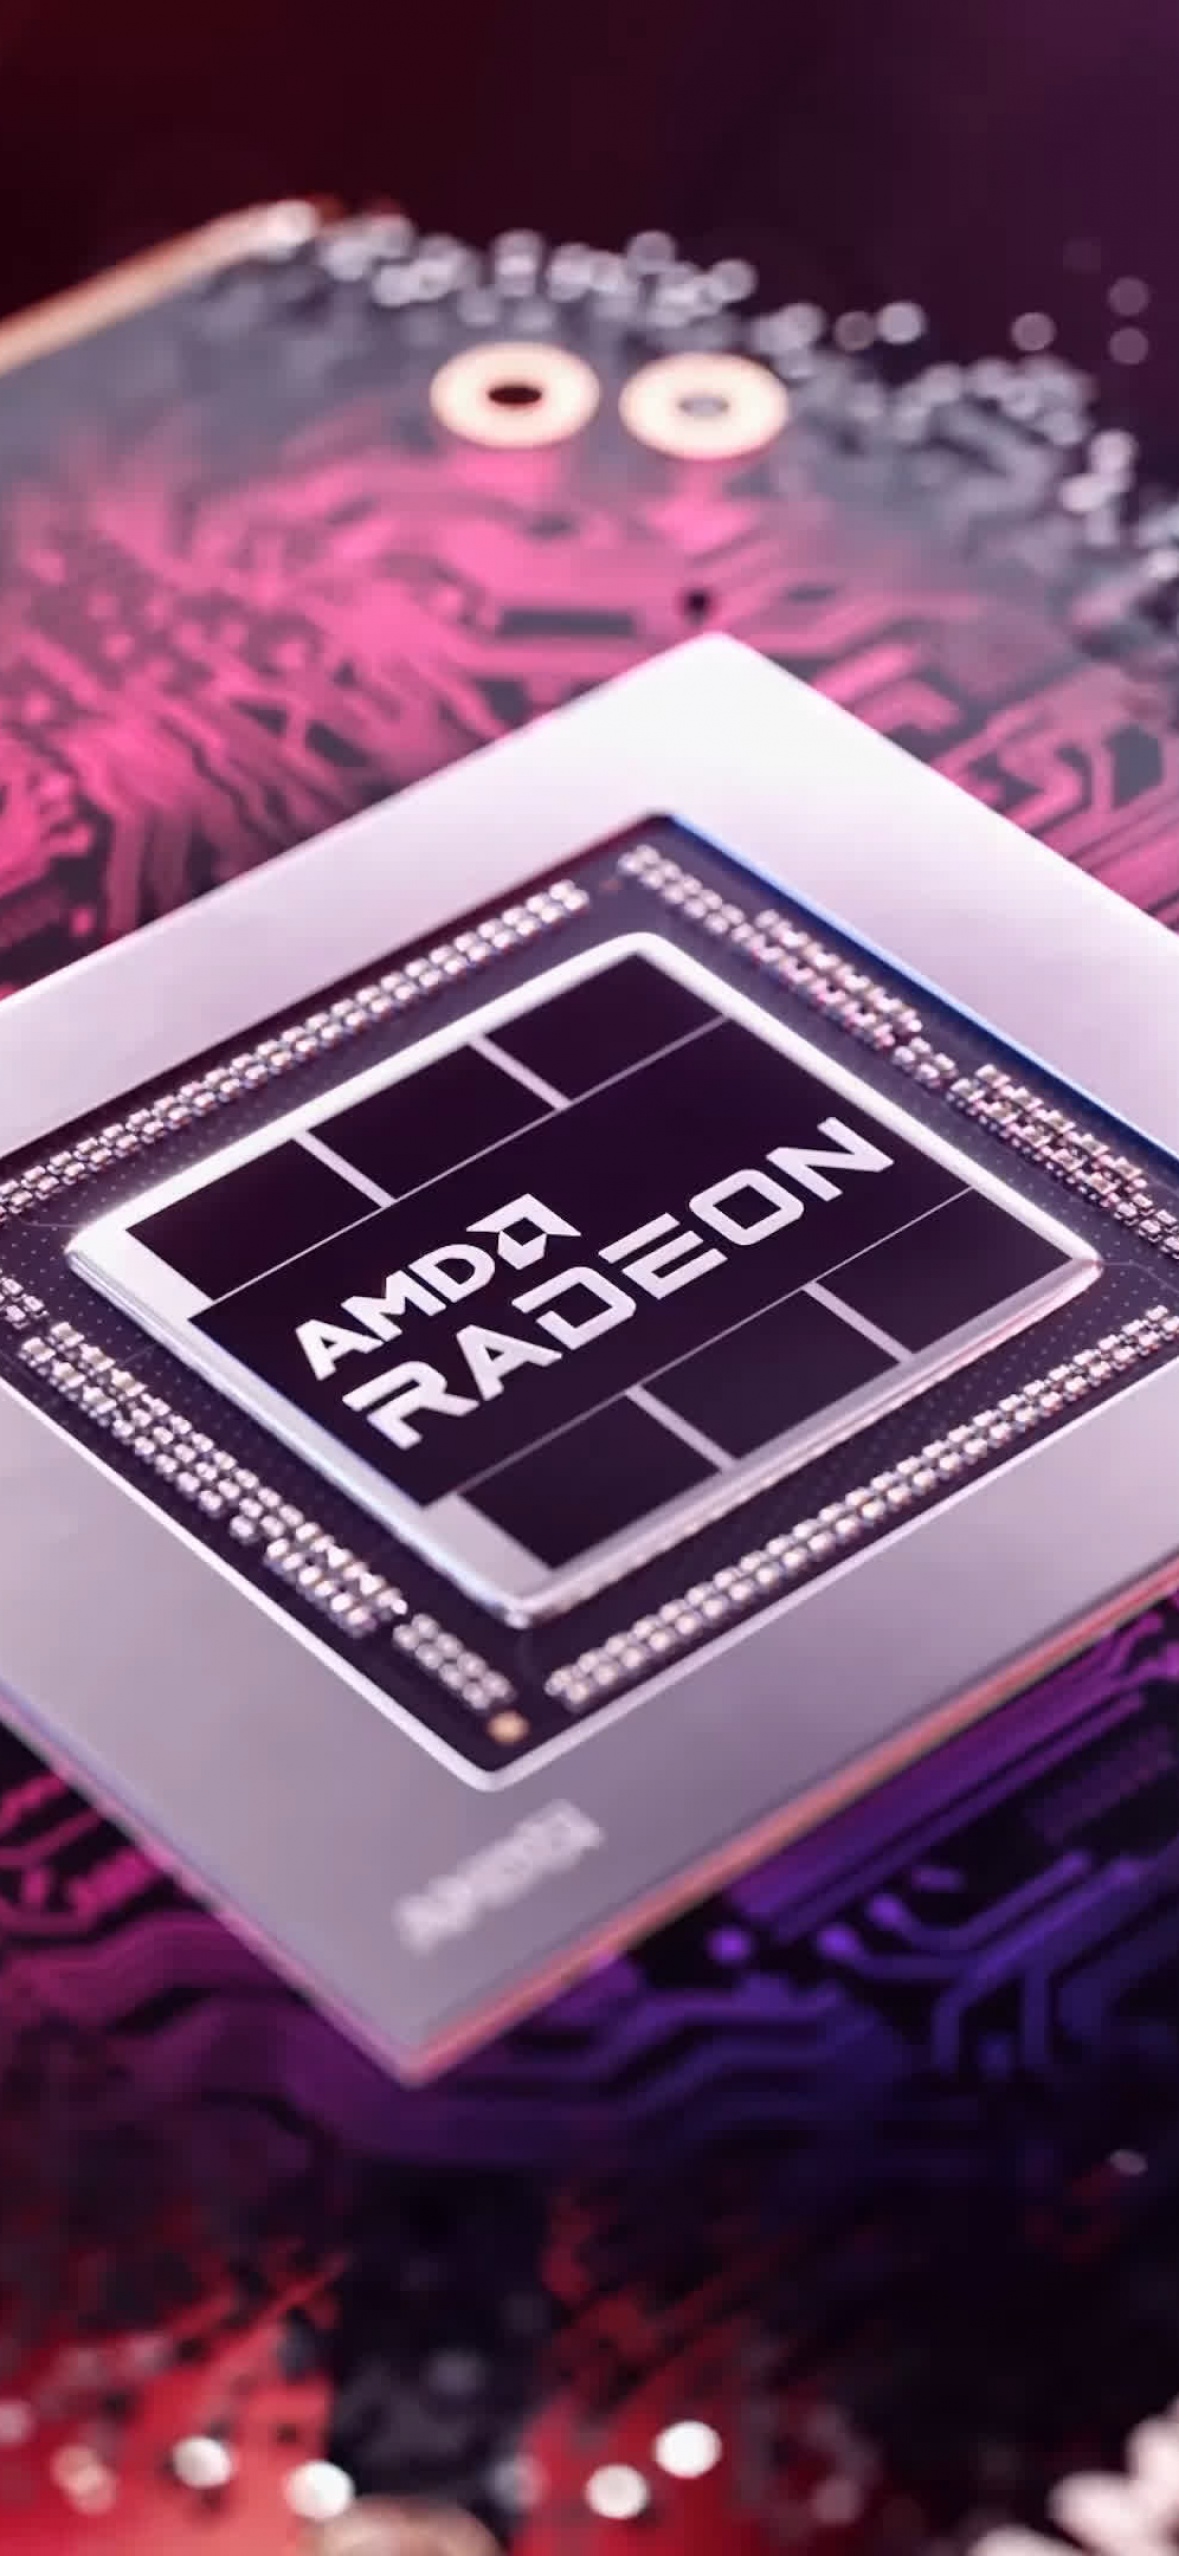 AMD Radeon Wallpapers 79 images